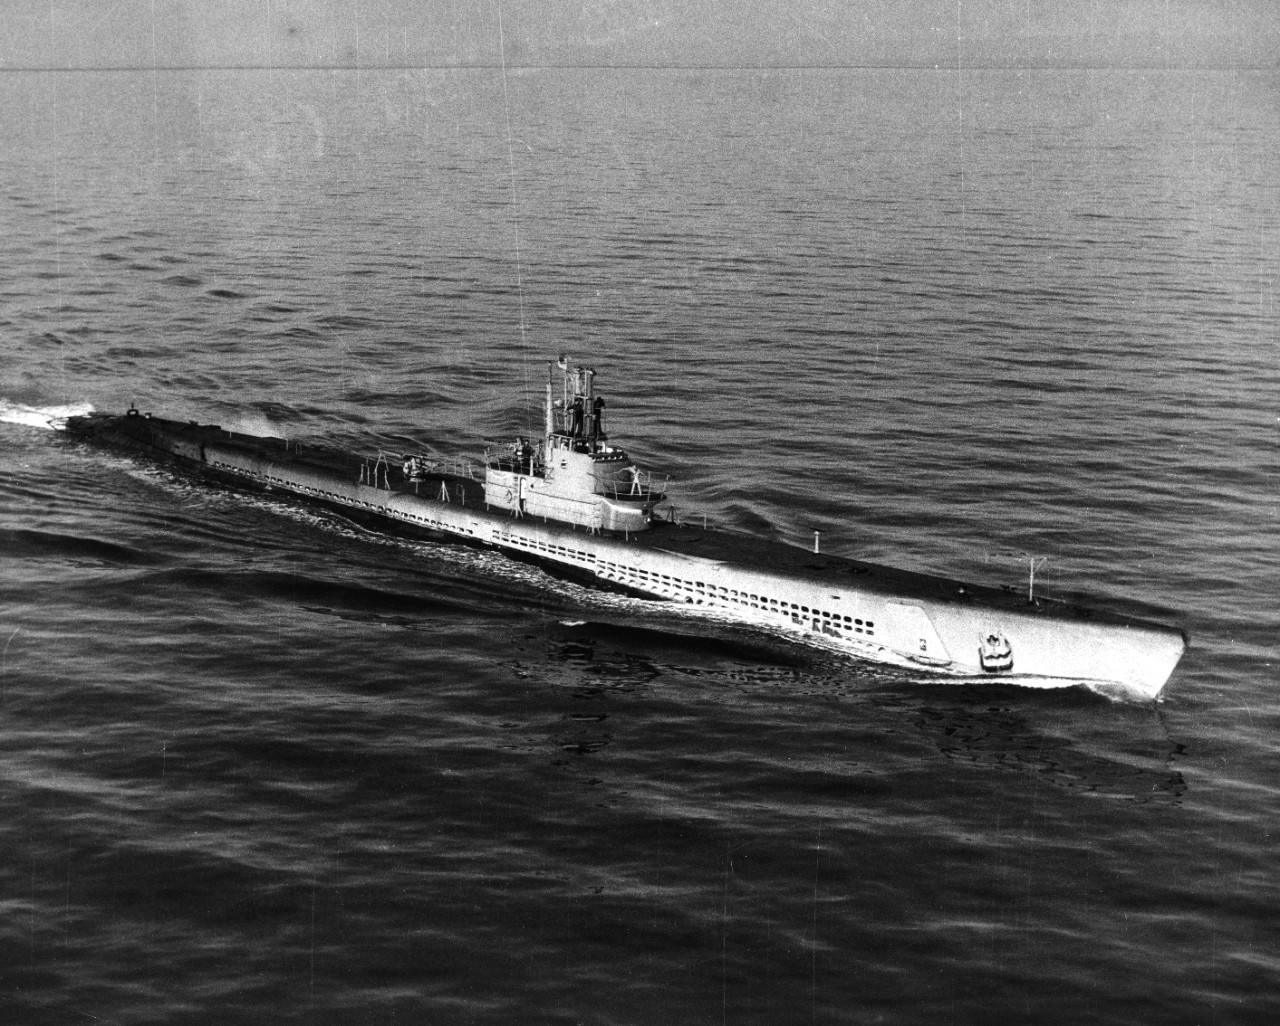 Submarine USS Tambor (SS-198) underway on the surface